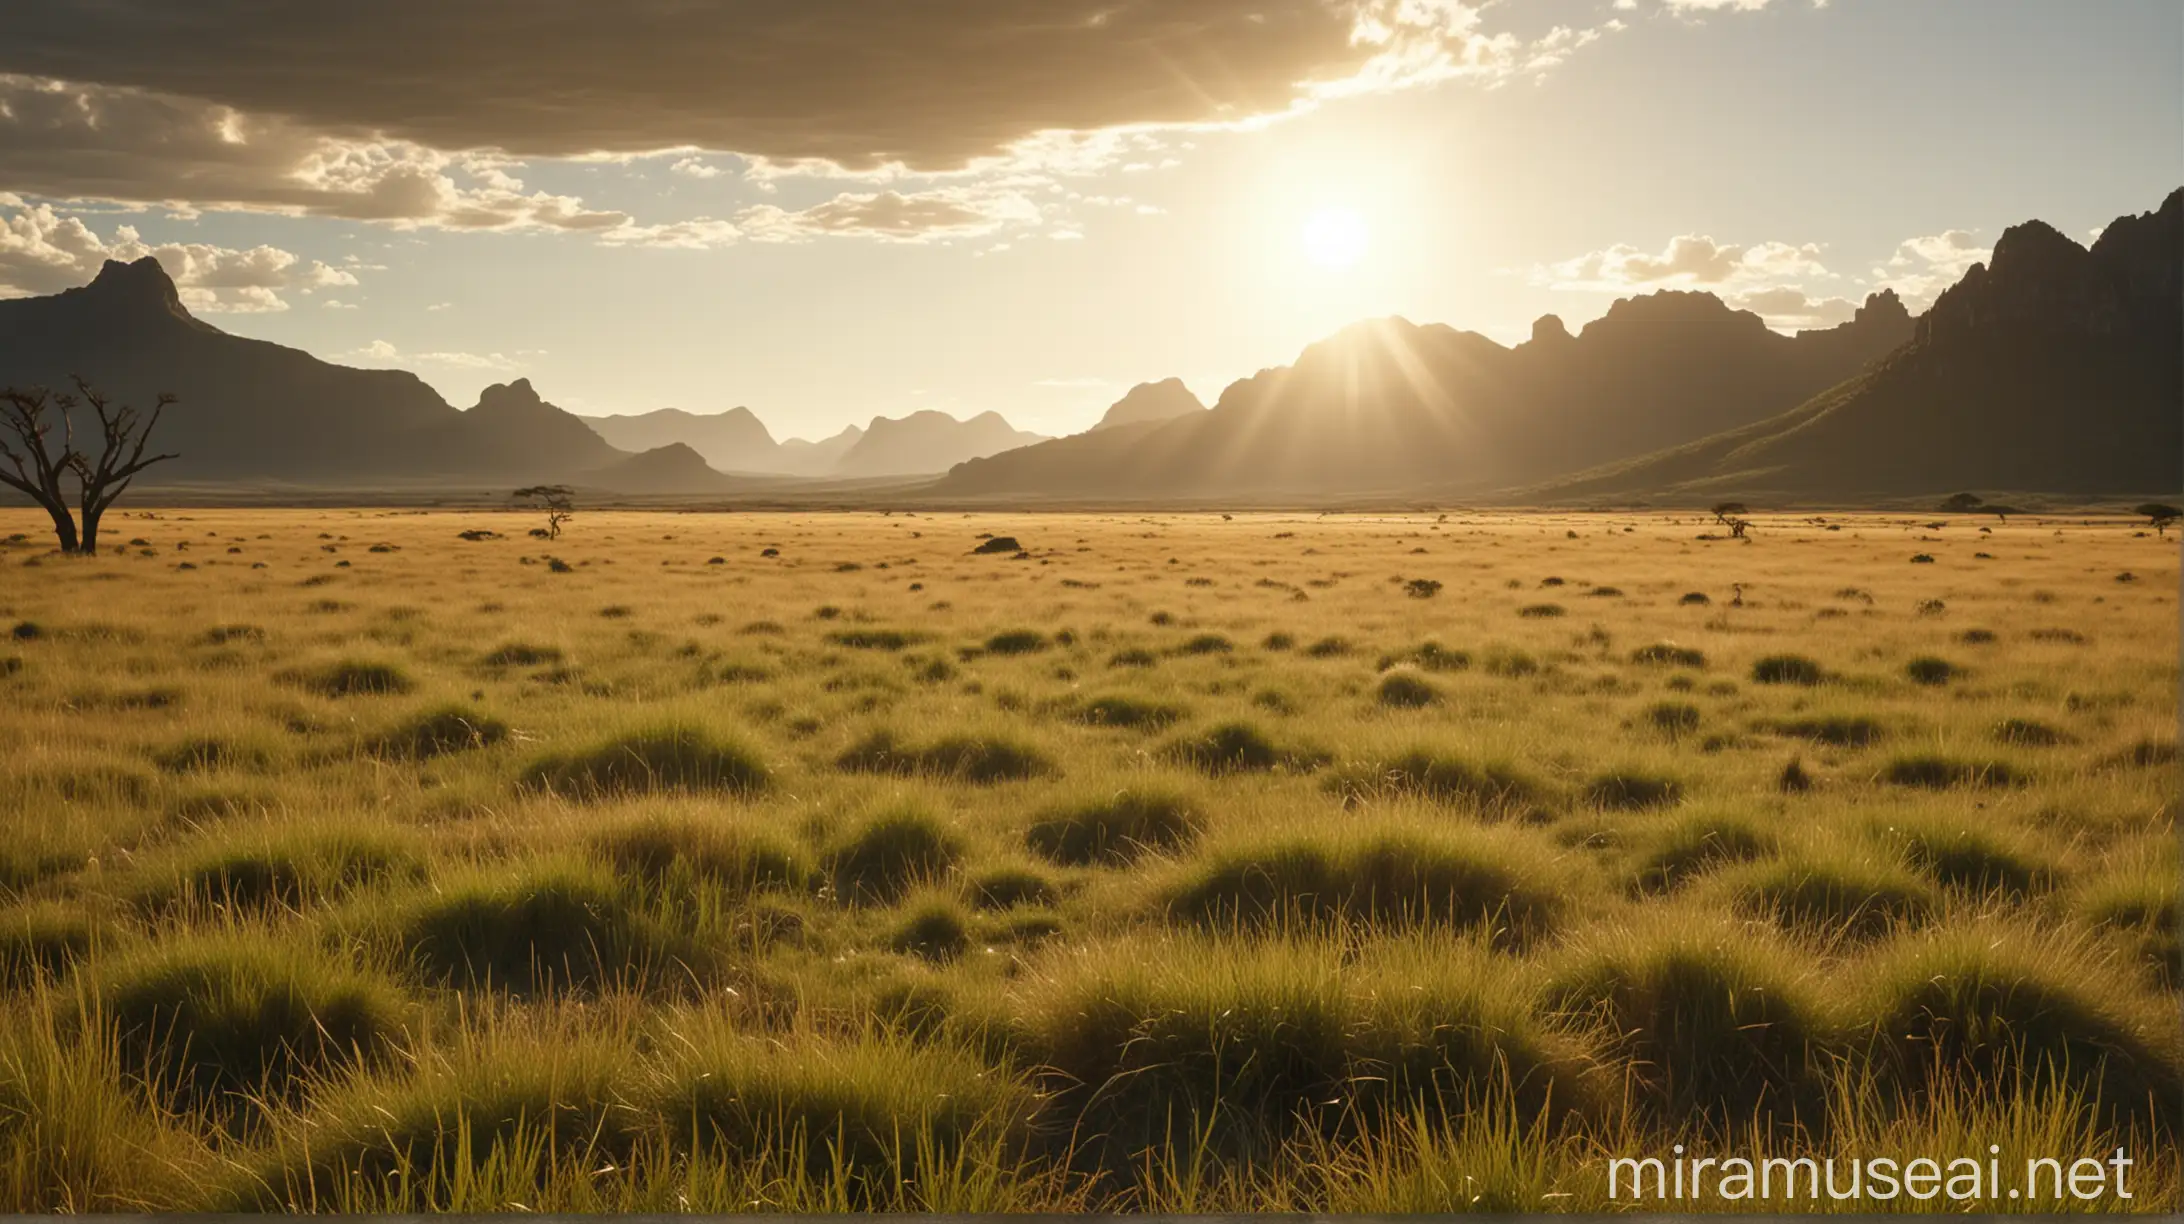 vast, beautiful wideshot of savanna landscape, lush grass, sun, mountains in the background, beautiful